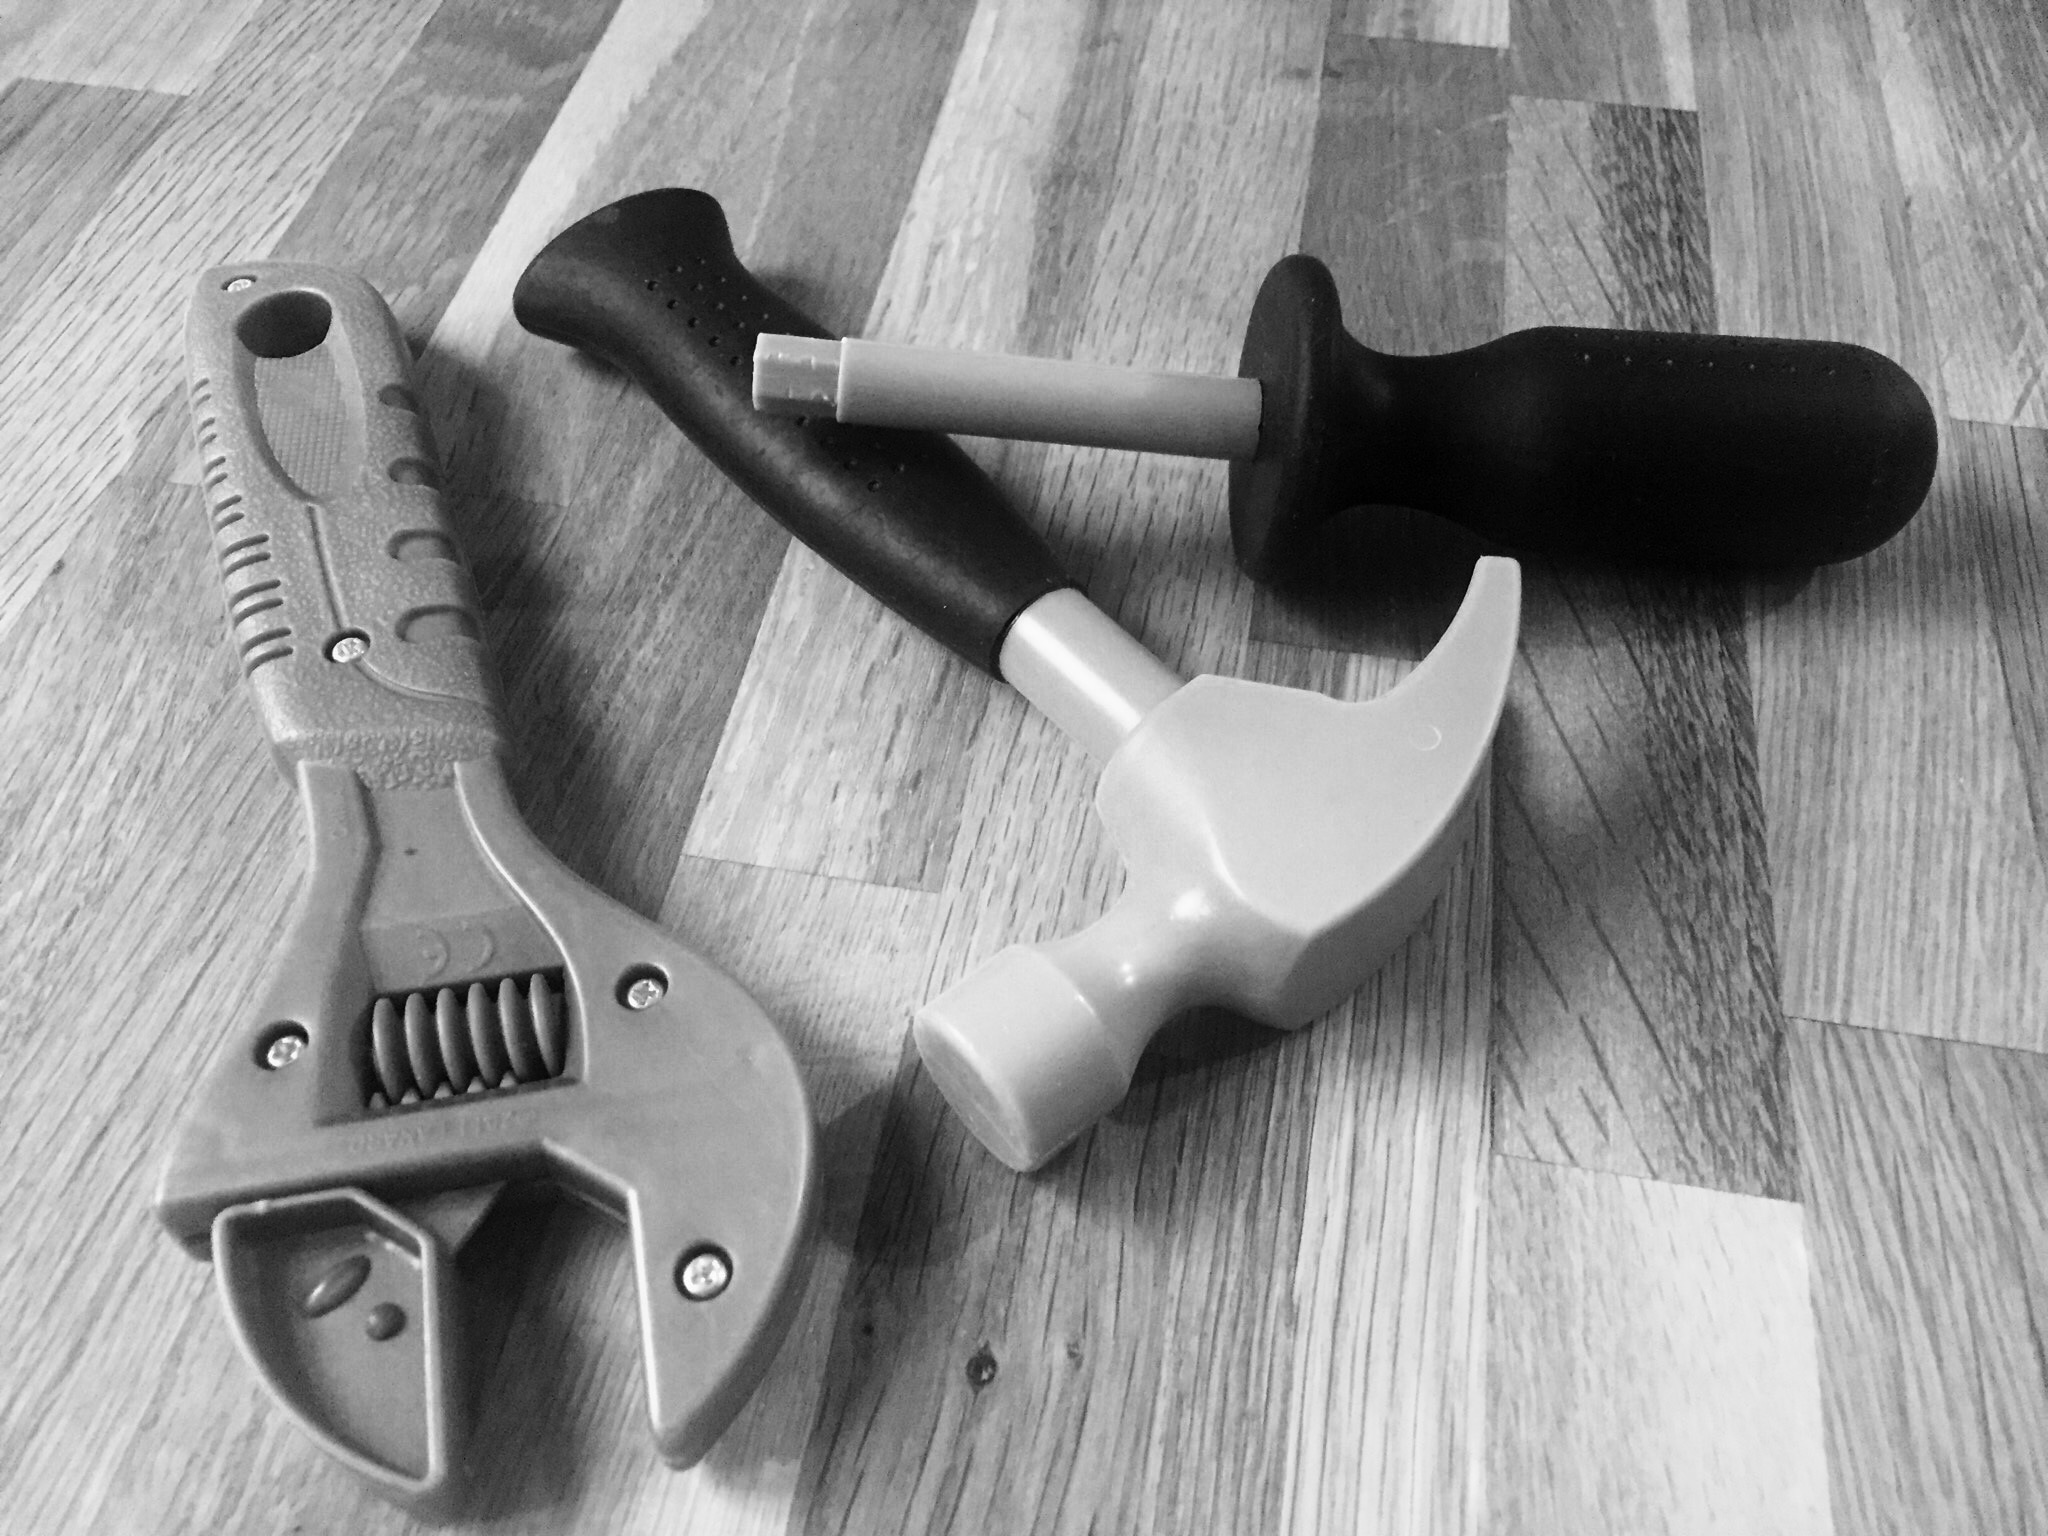 Plastic Adjustable Wrench Hammer And Screwdriver Toy - Dewalt Dwe315k Oscillating Multi-tool Kit , HD Wallpaper & Backgrounds